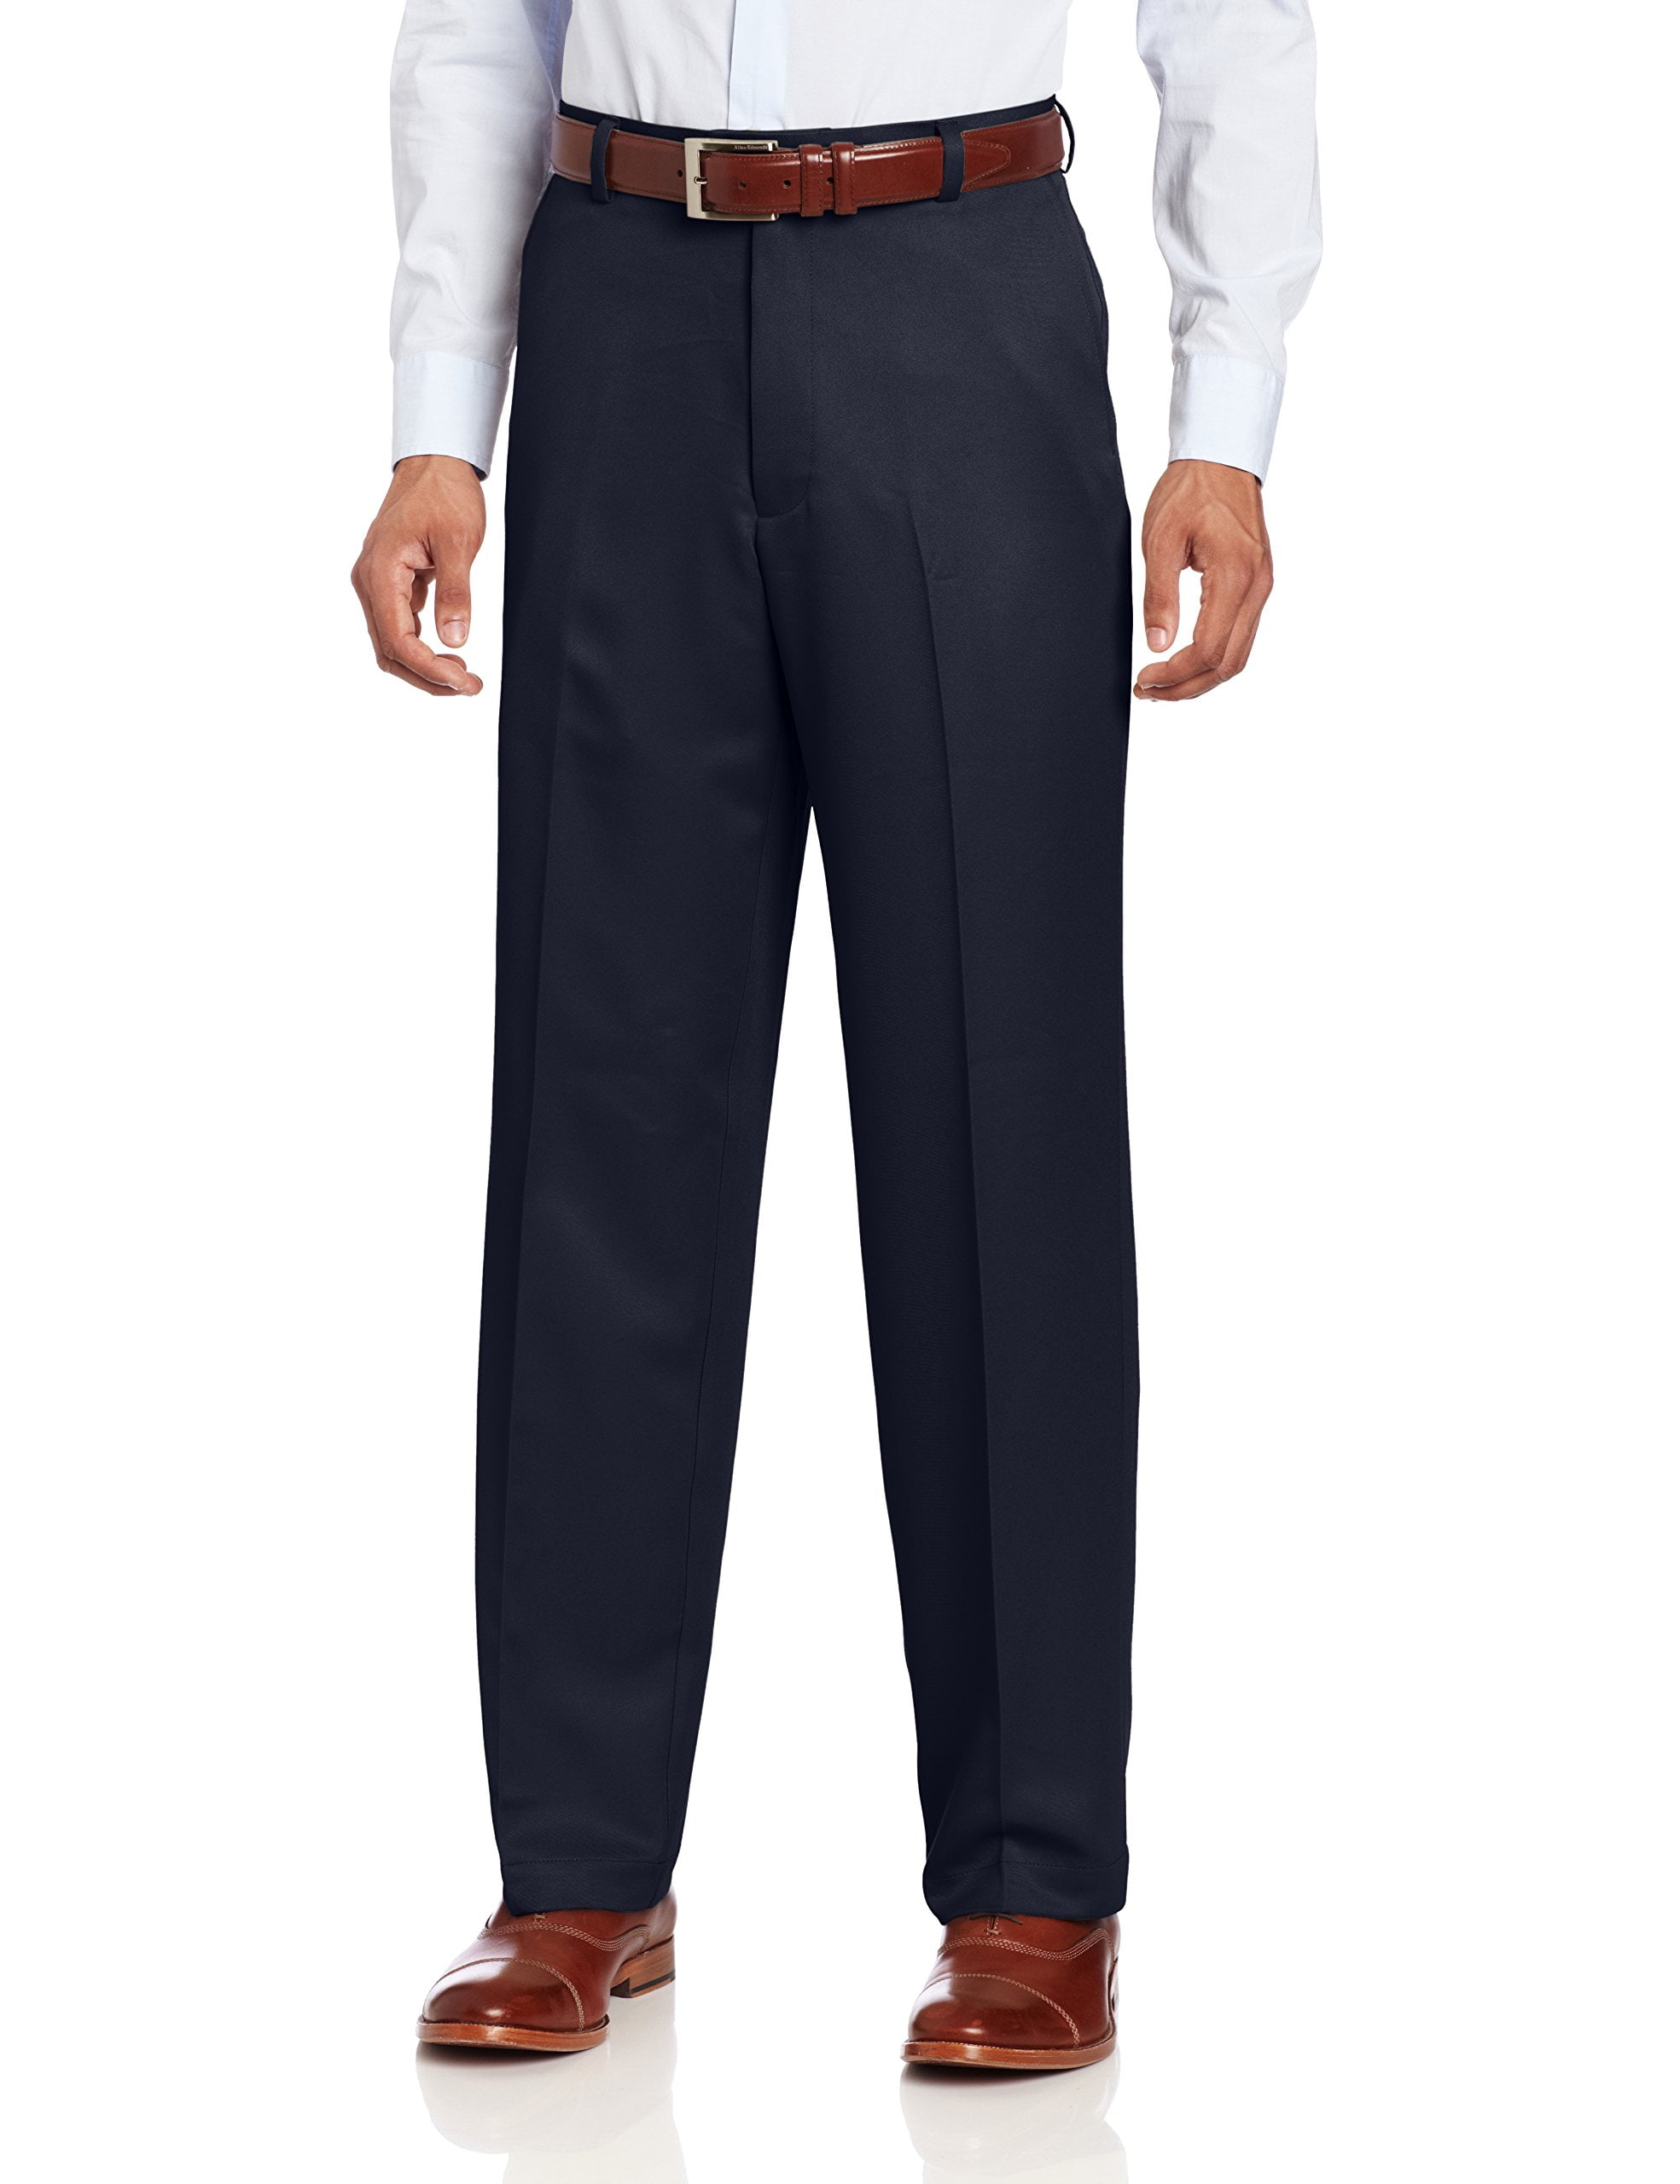 IZOD - izod- flat front microsanded golf pants - Walmart.com - Walmart.com